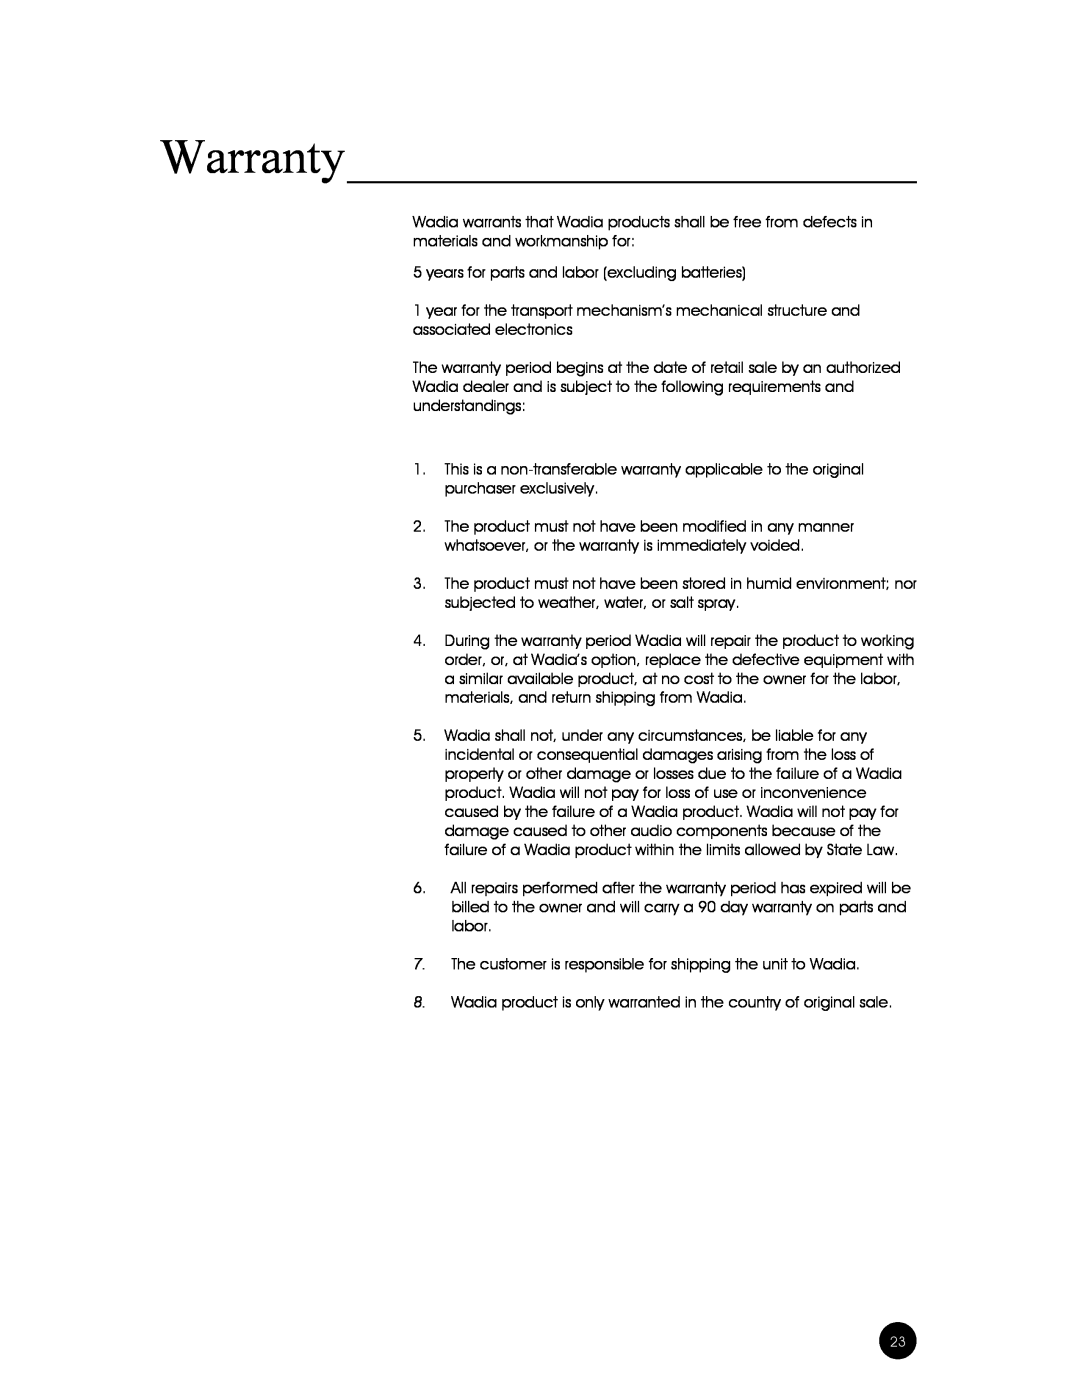 Wadia Digital 302 owner manual Warranty 